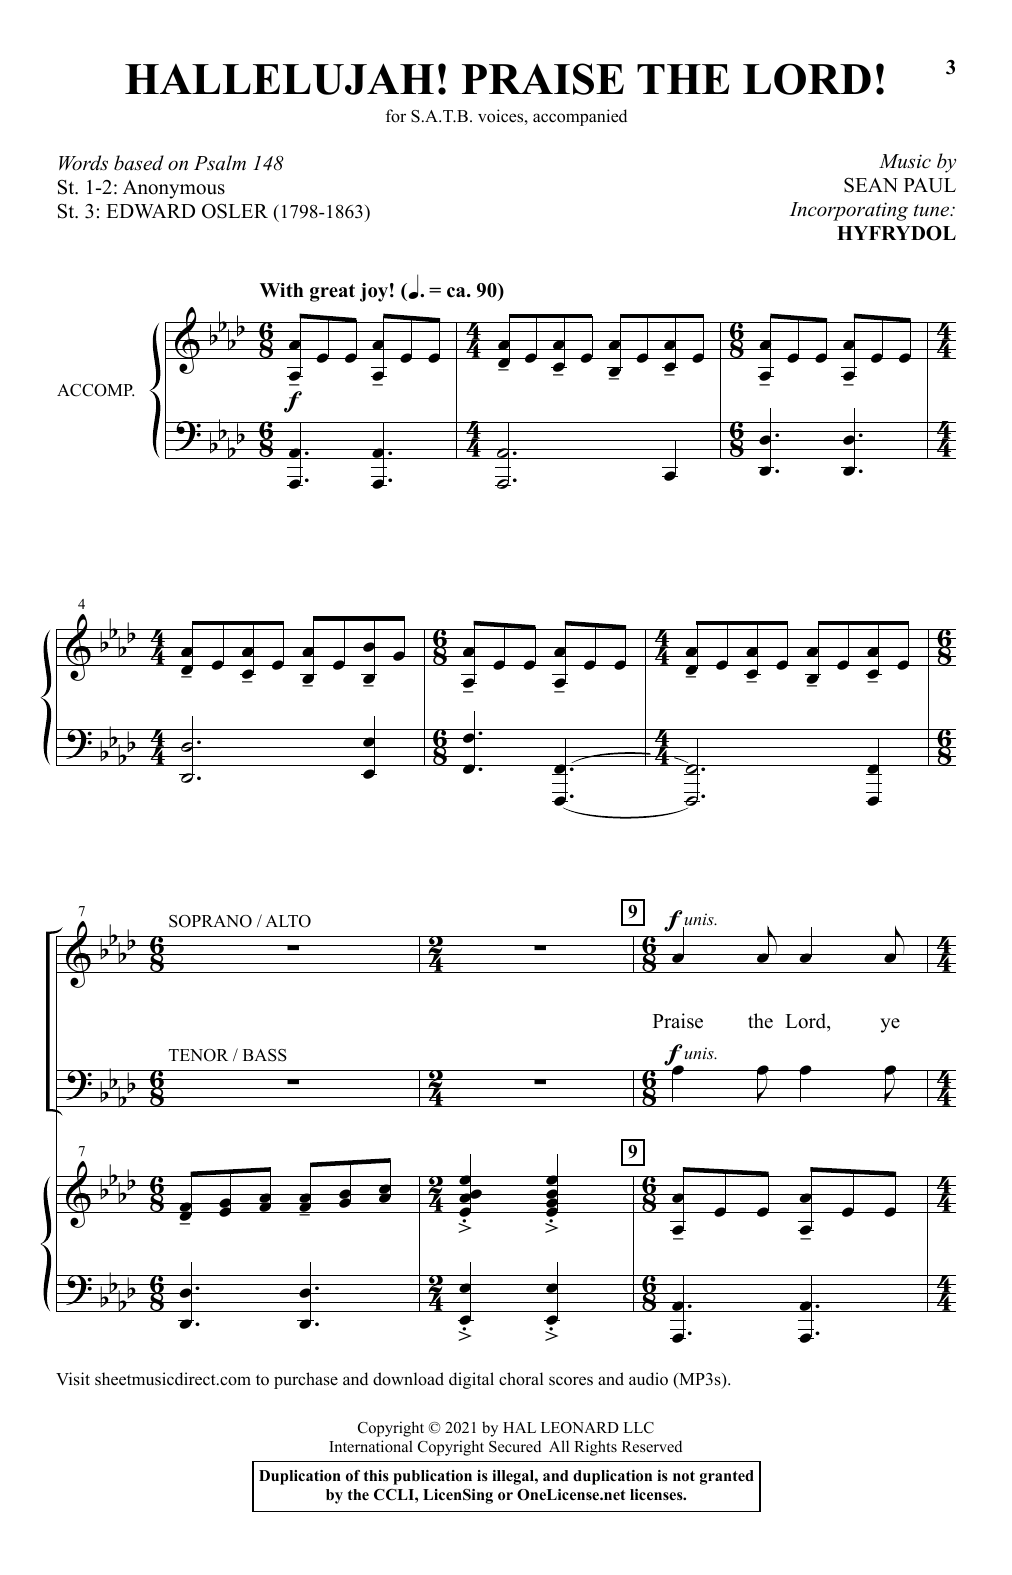 Sean Paul Hallelujah! Praise The Lord! Sheet Music Notes & Chords for SATB Choir - Download or Print PDF